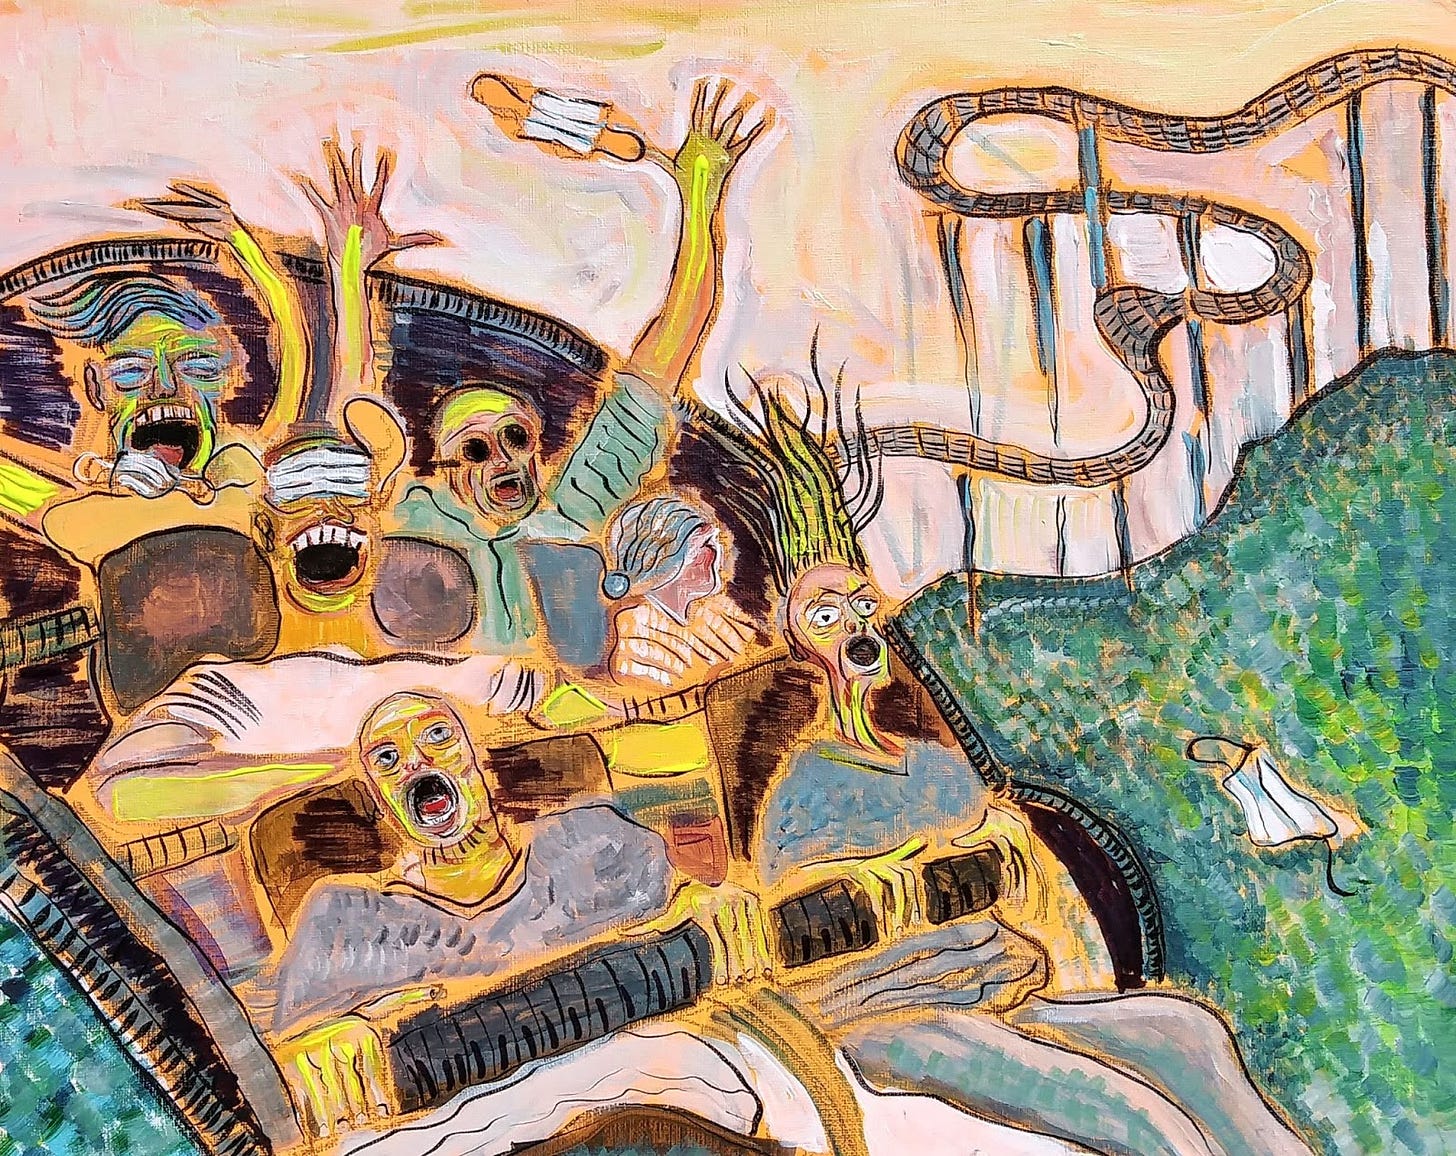 Dustin Elliott, “Amusements” (2021) Oil on canvas. For more information, https://www.instagram.com/stillstabbin/